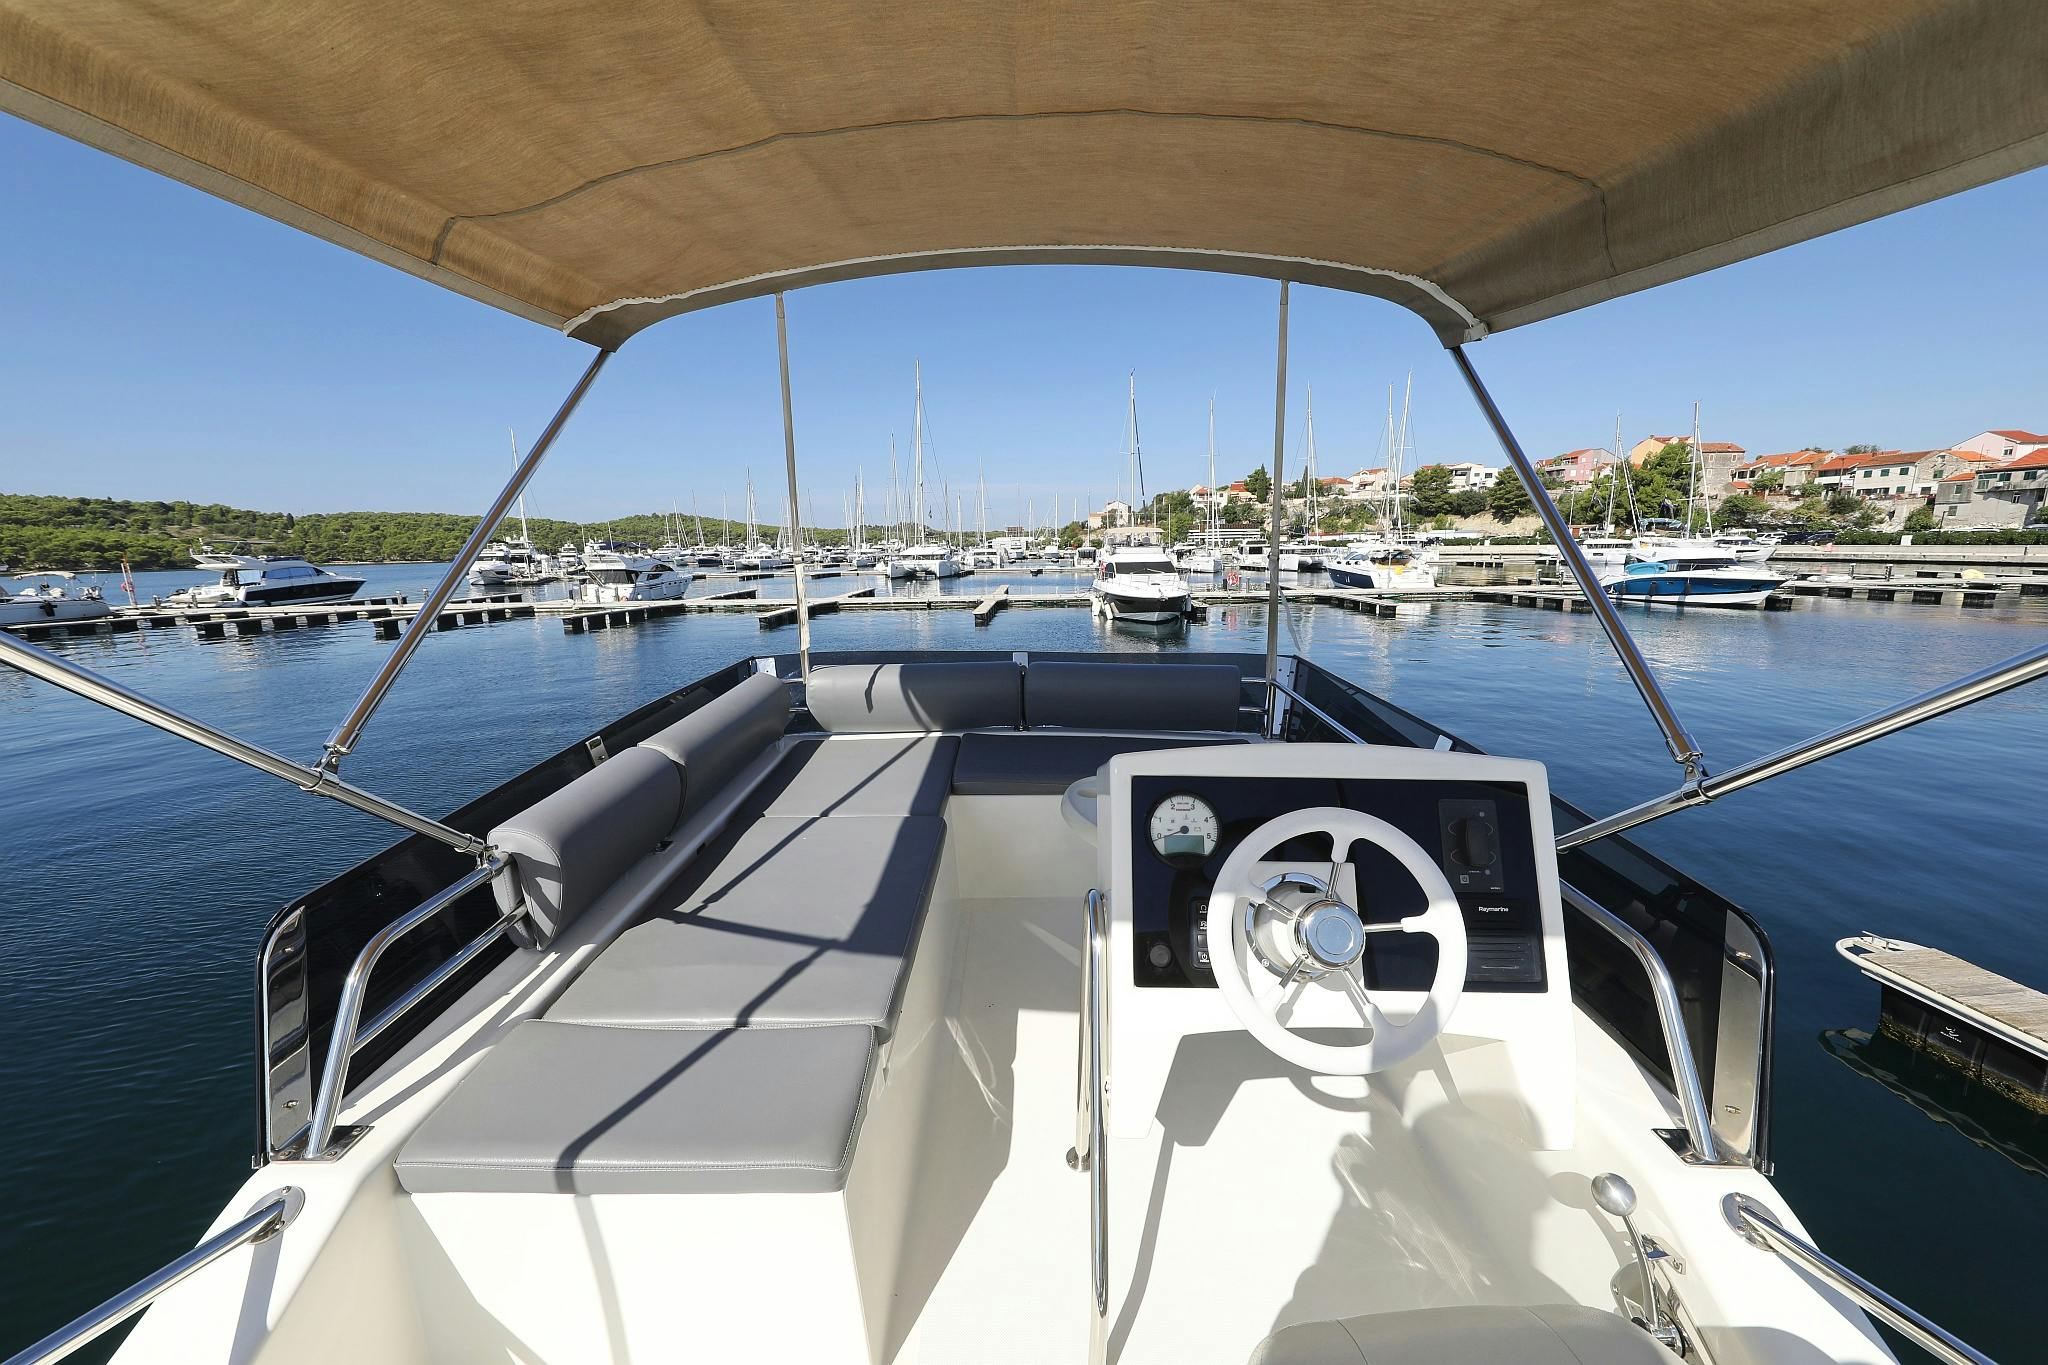 Book Futura 40 Grand Horizon Motor yacht for bareboat charter in Marina Mandalina, Sibenik, Šibenik region, Croatia with TripYacht!, picture 9